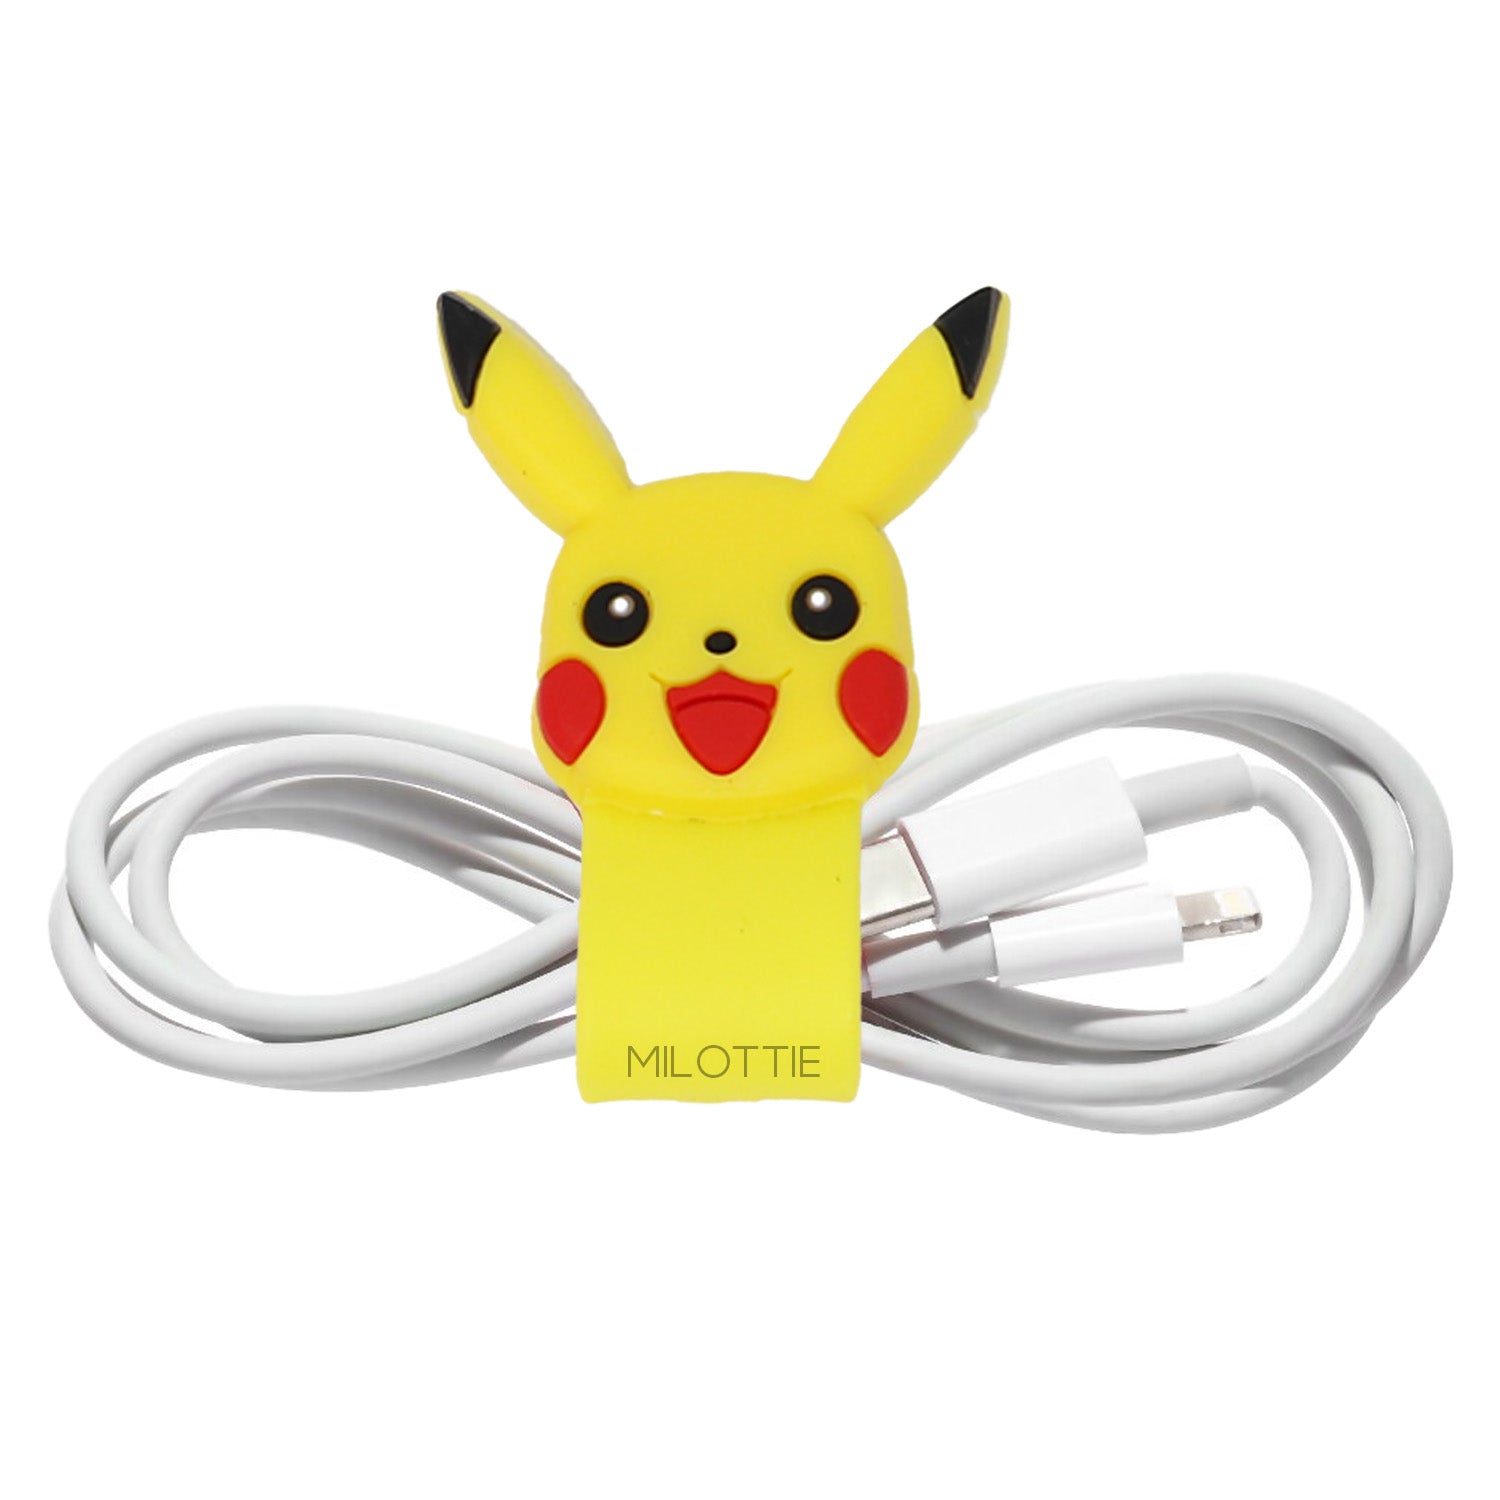 Pikachu Snap Button Cable Organizer